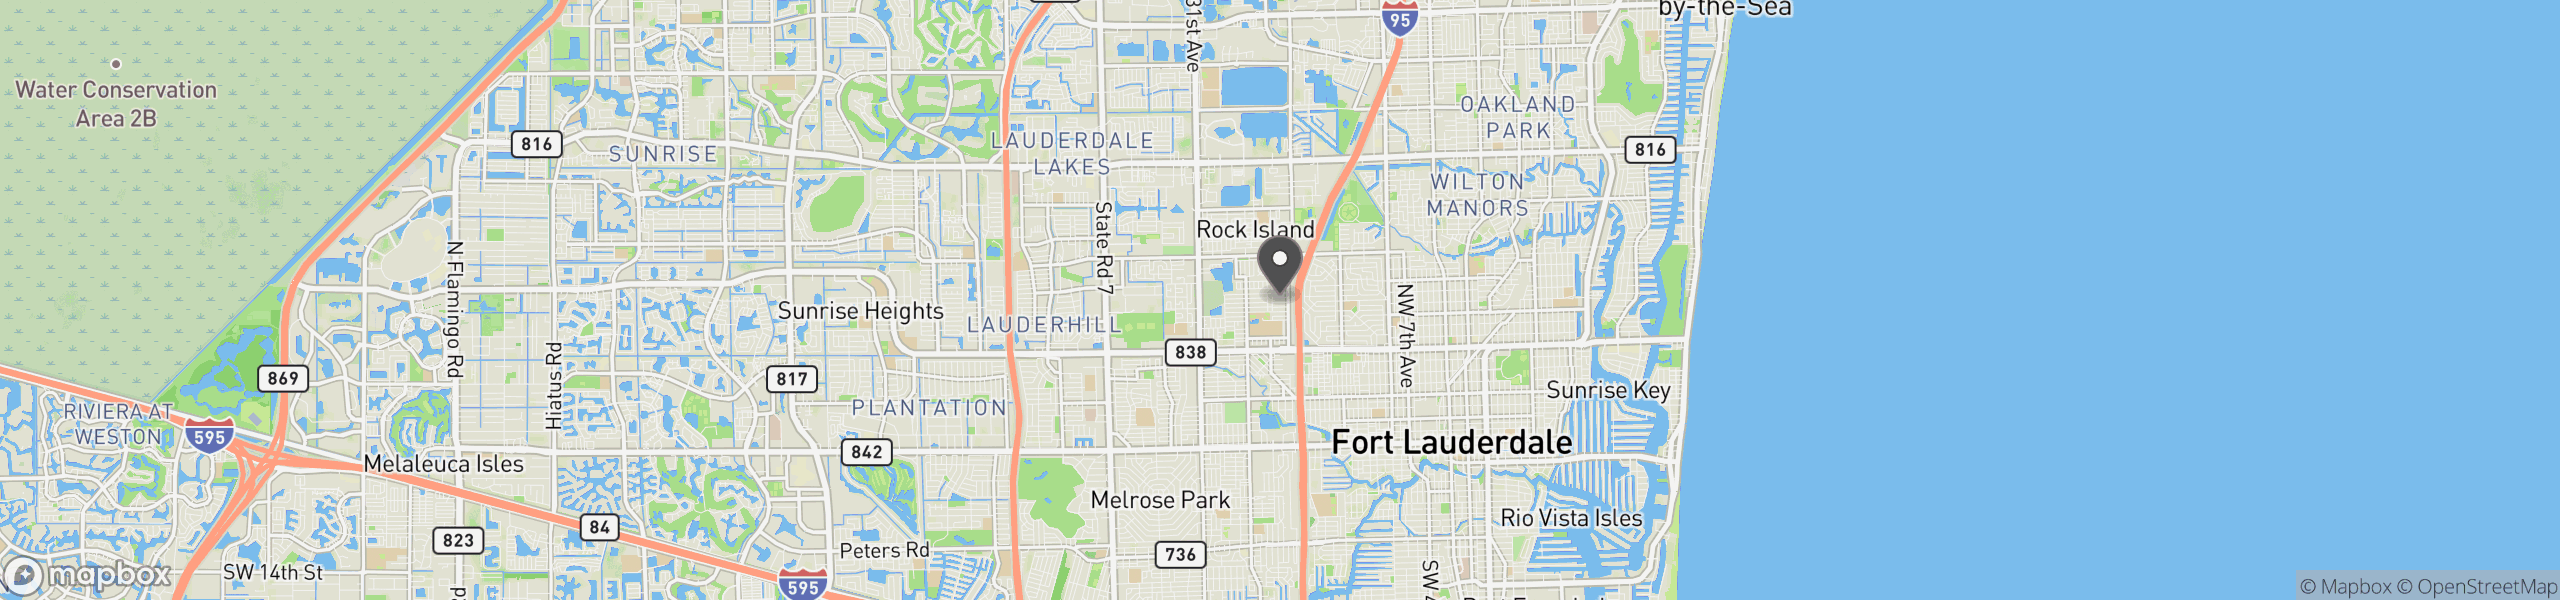 Fort Lauderdale, FL 33311